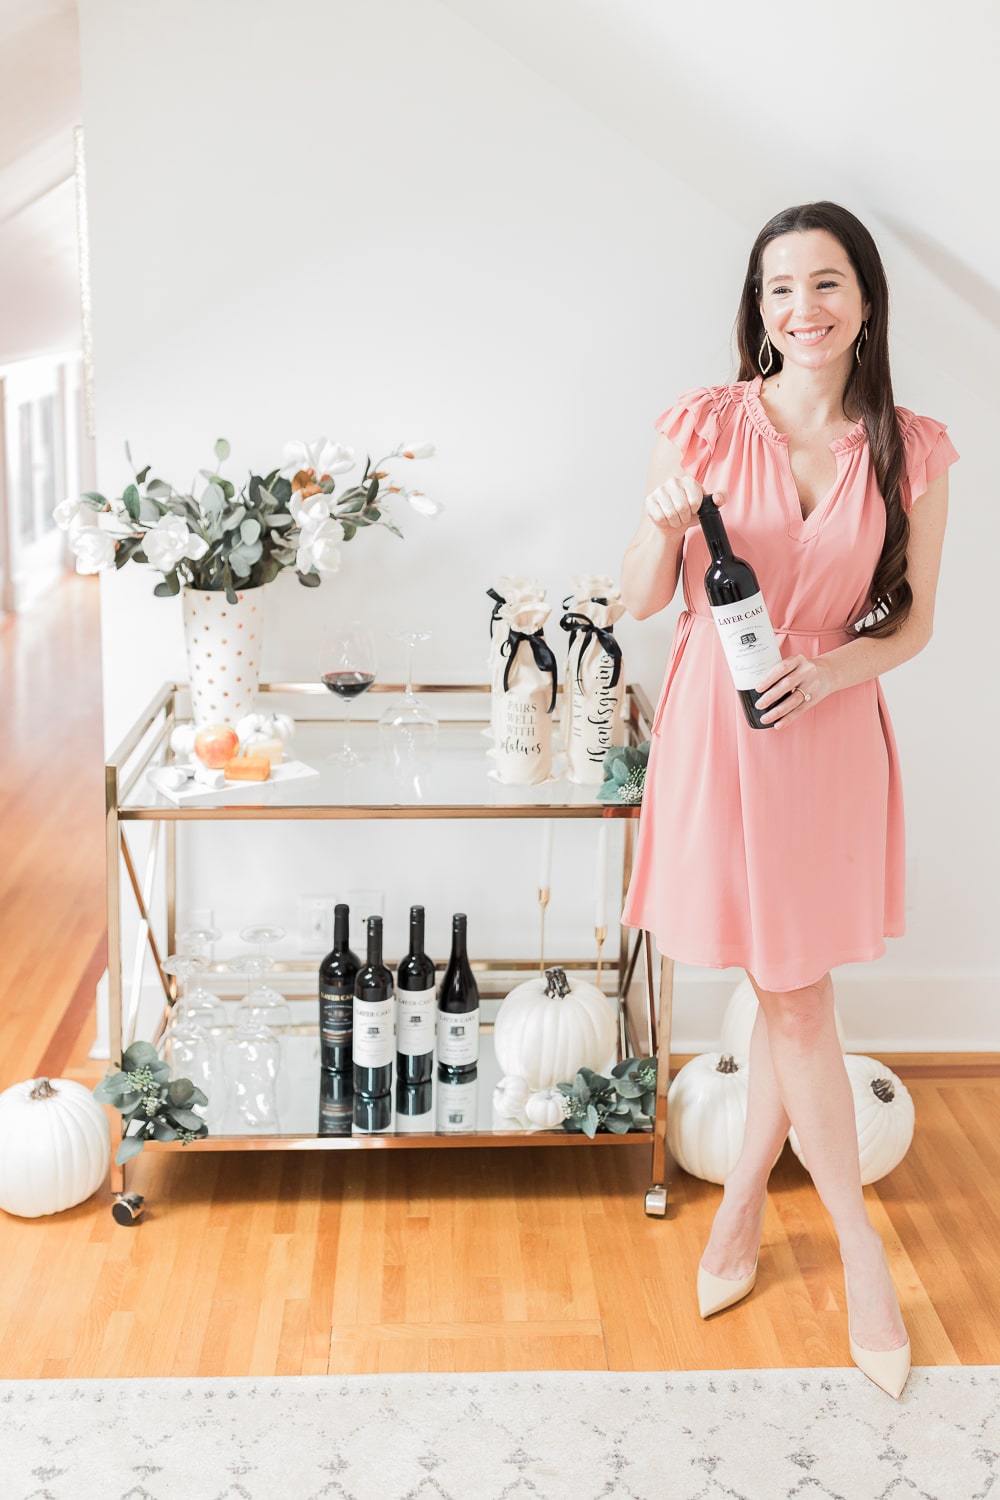 DIY wine gift bags tutorial by DIY blogger Stephanie Ziajka on Diary of a Debutante